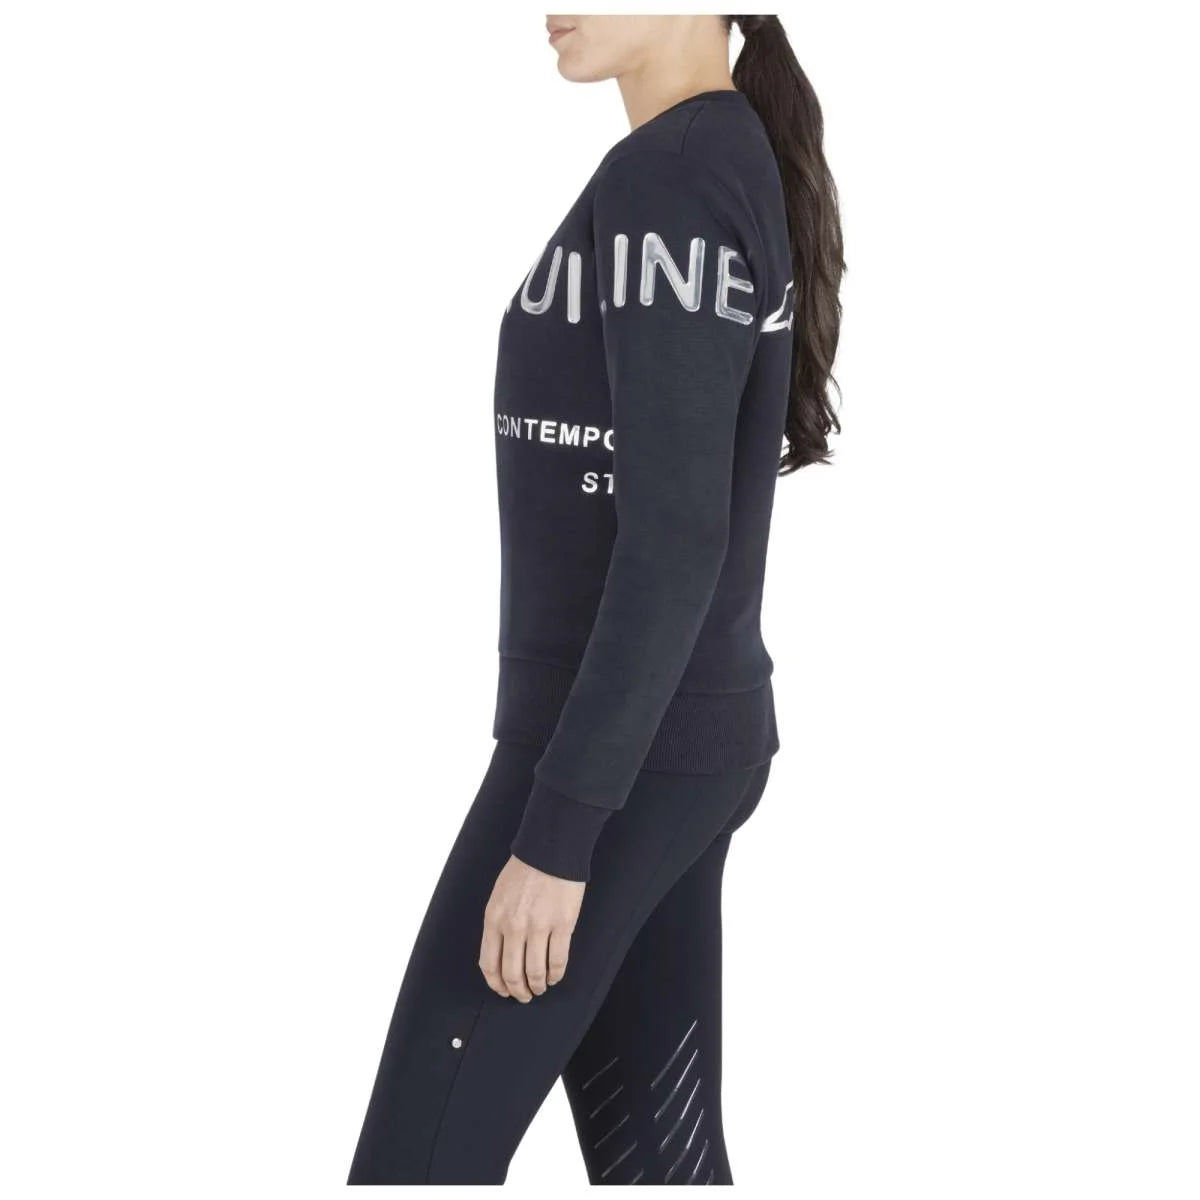 Equiline - Ladies Cenor Sweater/Sweatershirt